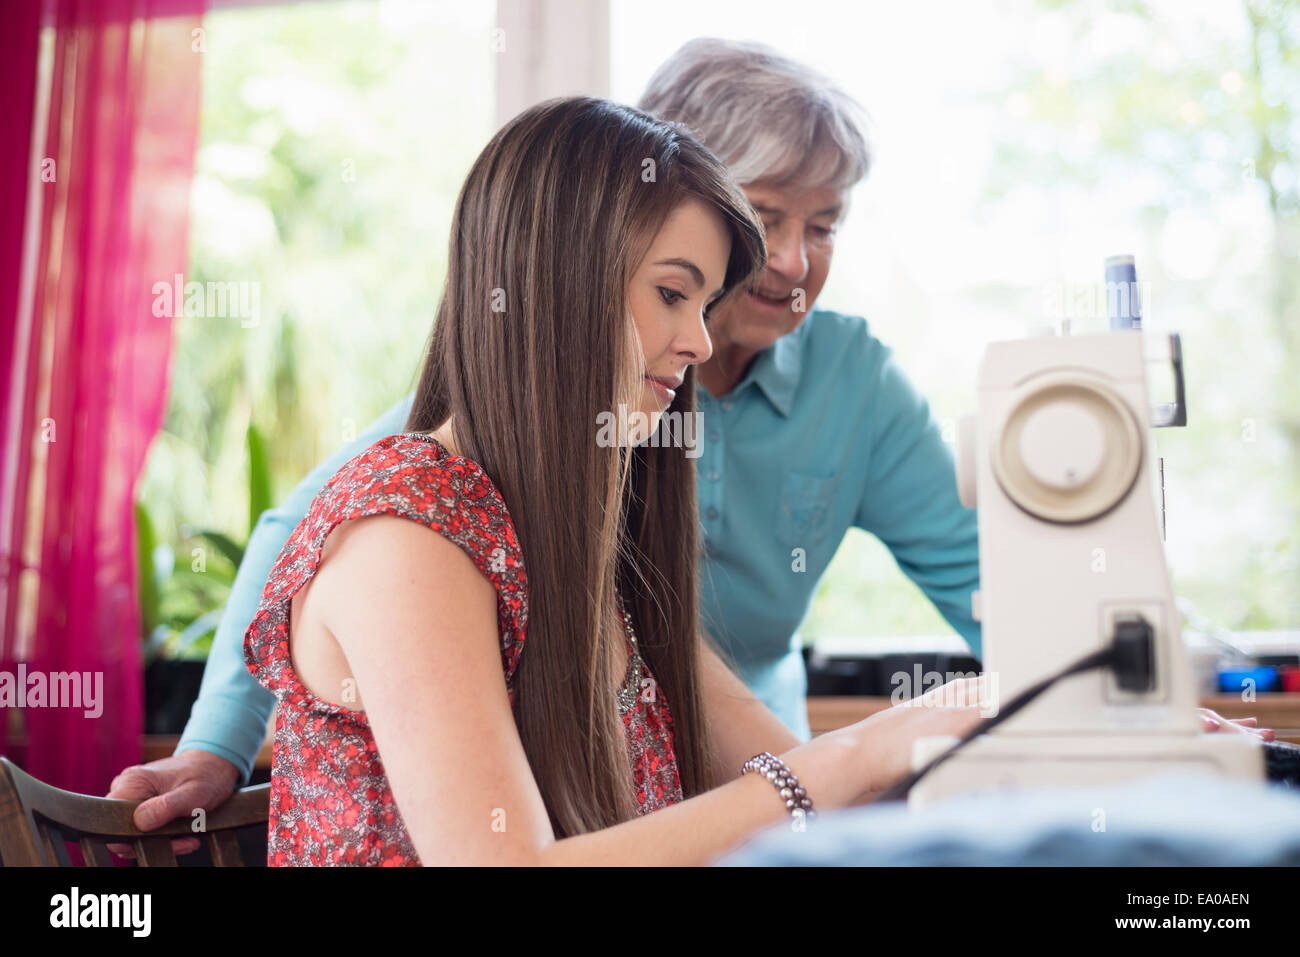 Senior woman watching granddaughter utiliser machine à coudre Banque D'Images